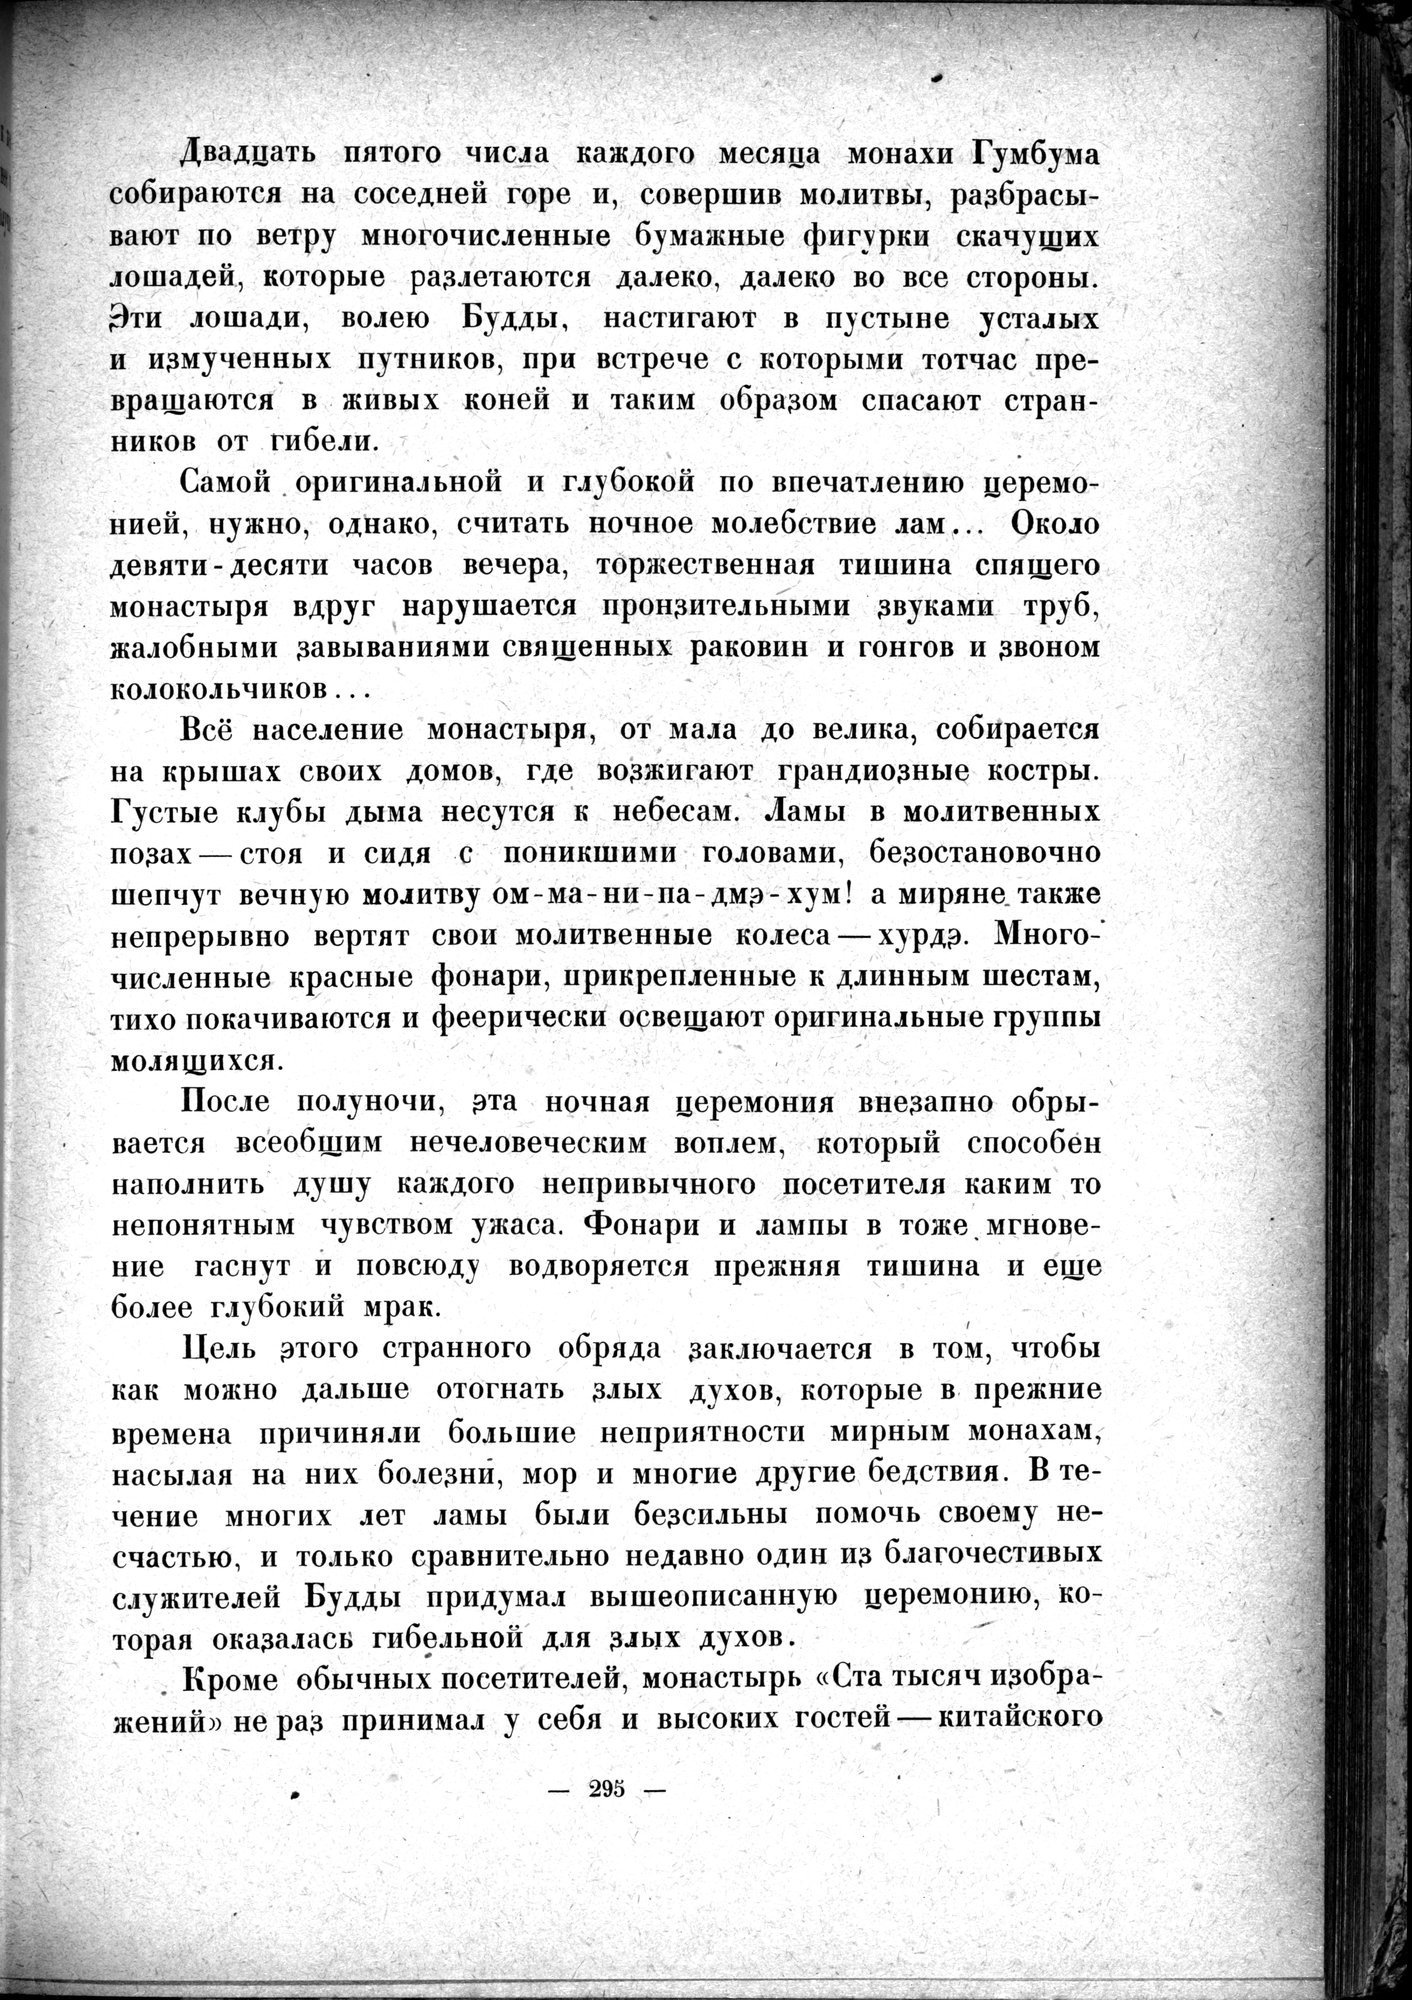 Mongoliya i Amdo i mertby gorod Khara-Khoto : vol.1 / Page 345 (Grayscale High Resolution Image)